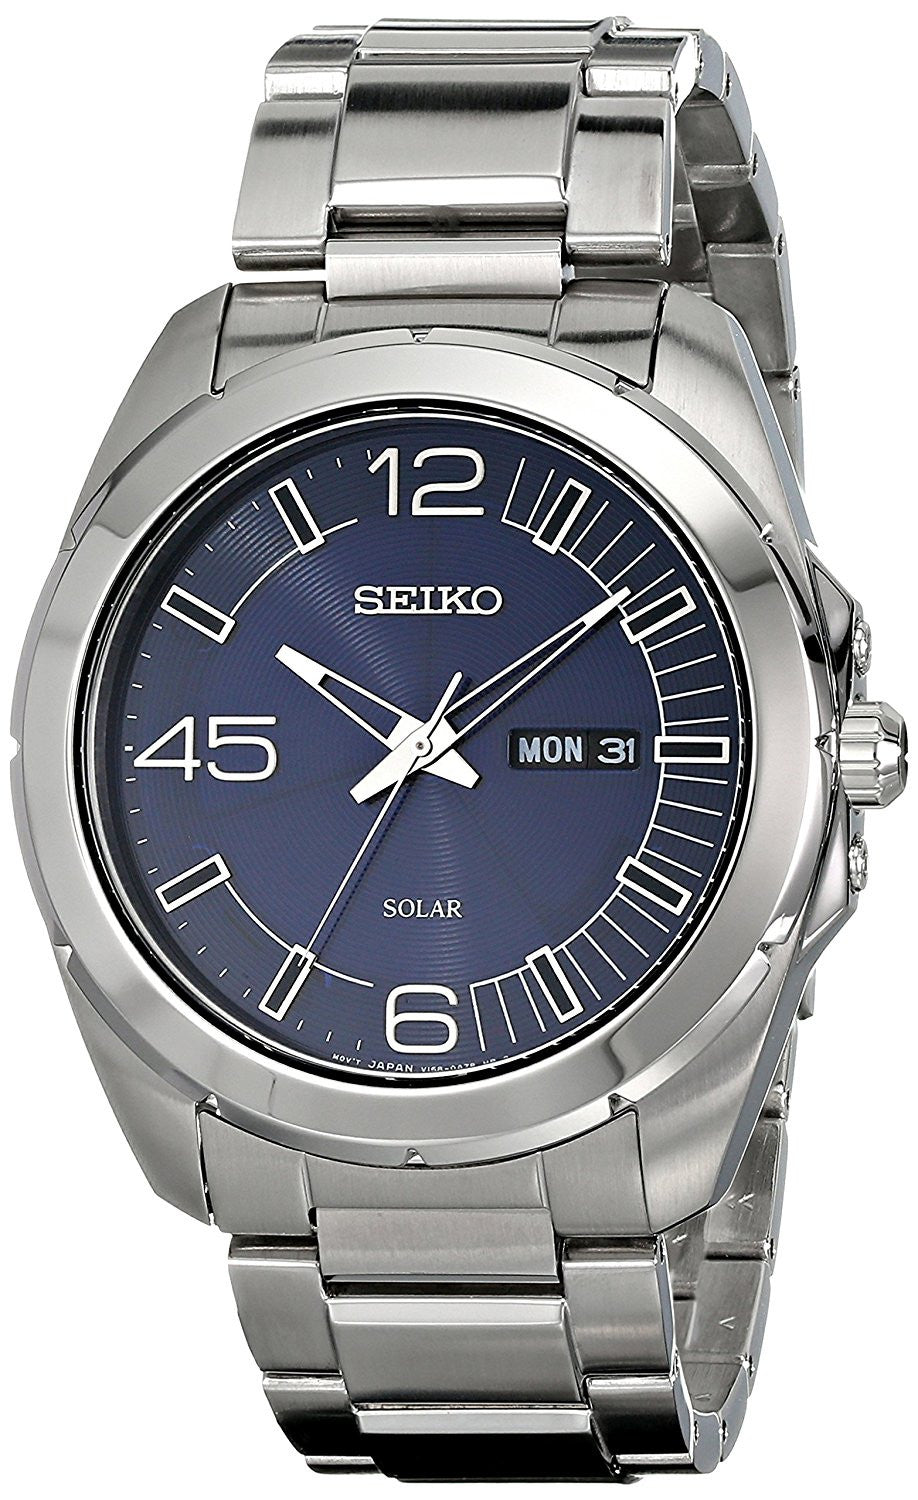 Seiko Men's SSC201 Analog Display Japanese Quartz Silver Watch